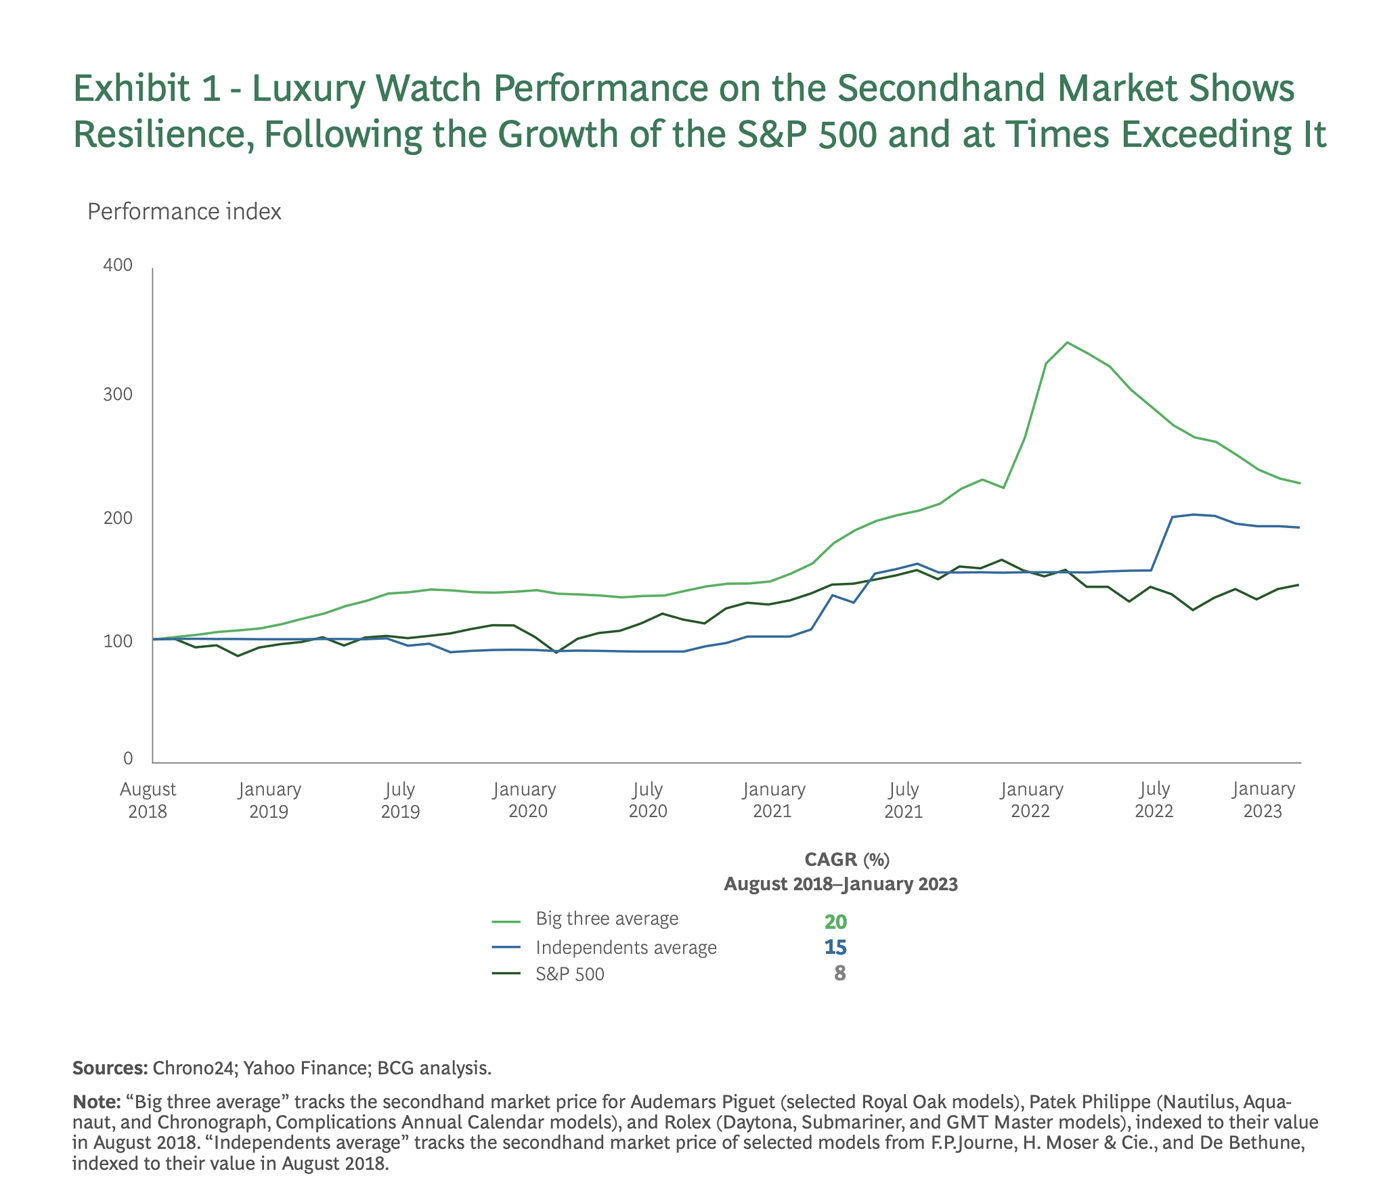 Luxury Watch Performance vs. S&P 500